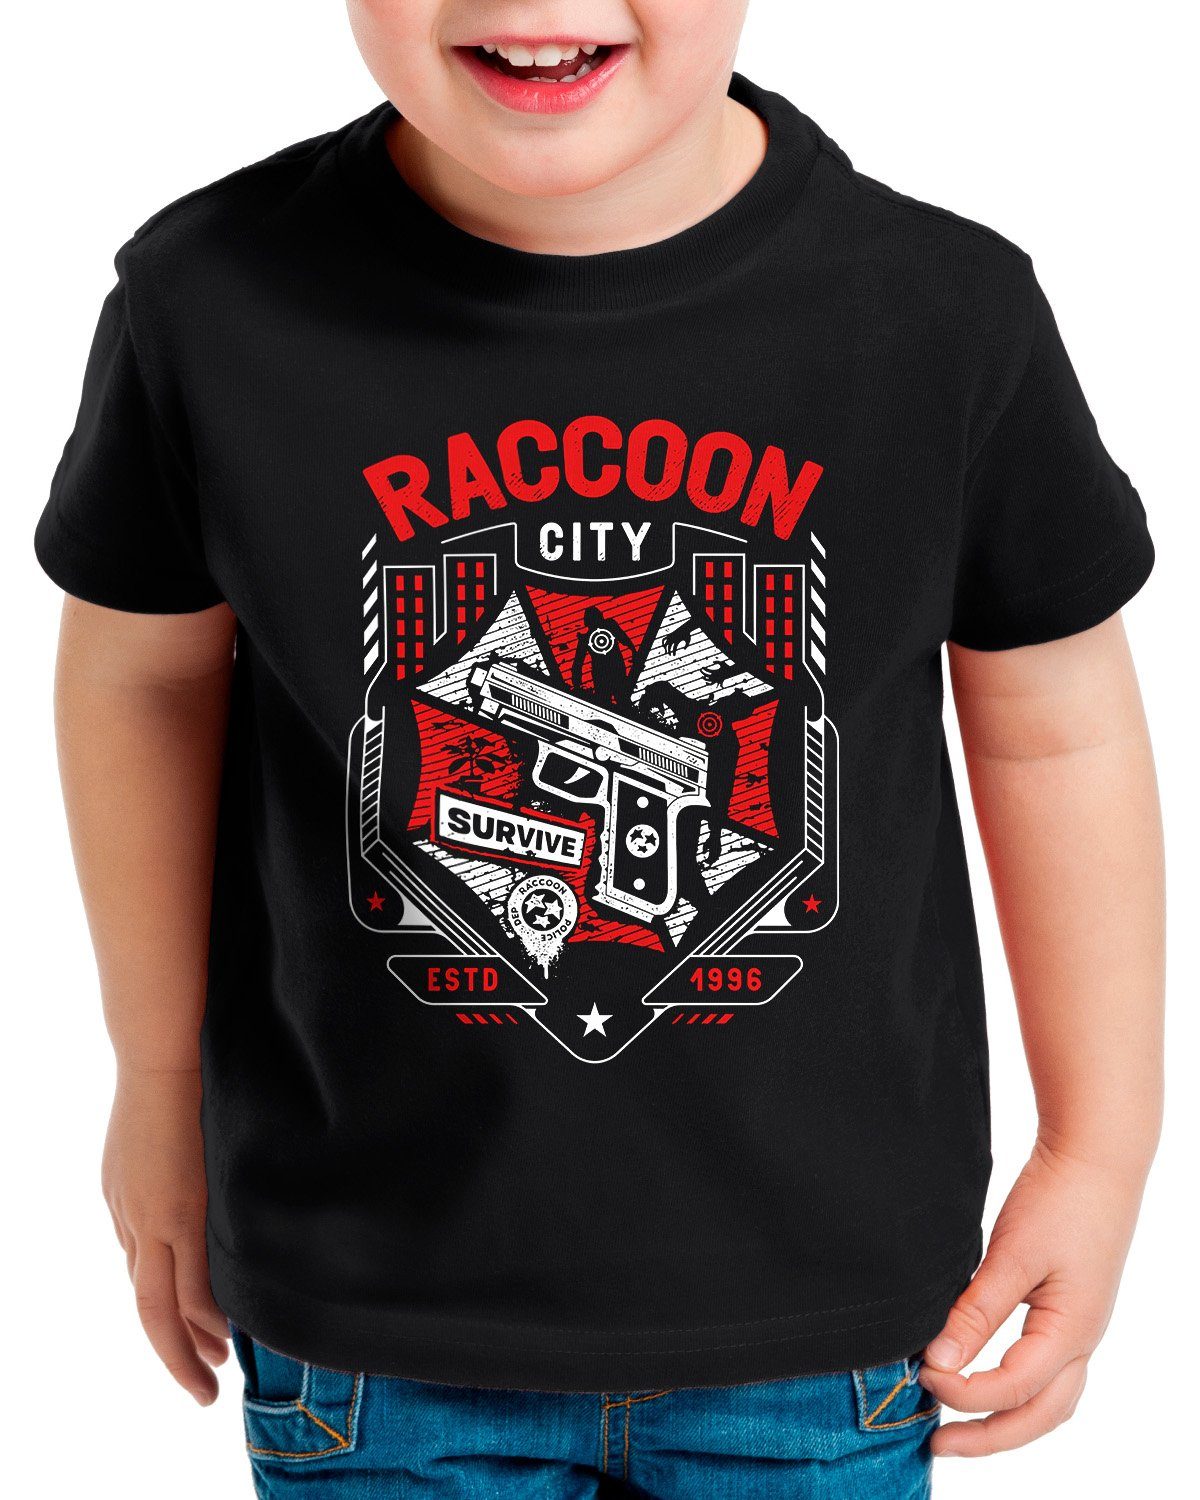 virus umbrella City zombie Raccoon evil resident T-Shirt Kinder Print-Shirt style3 corp